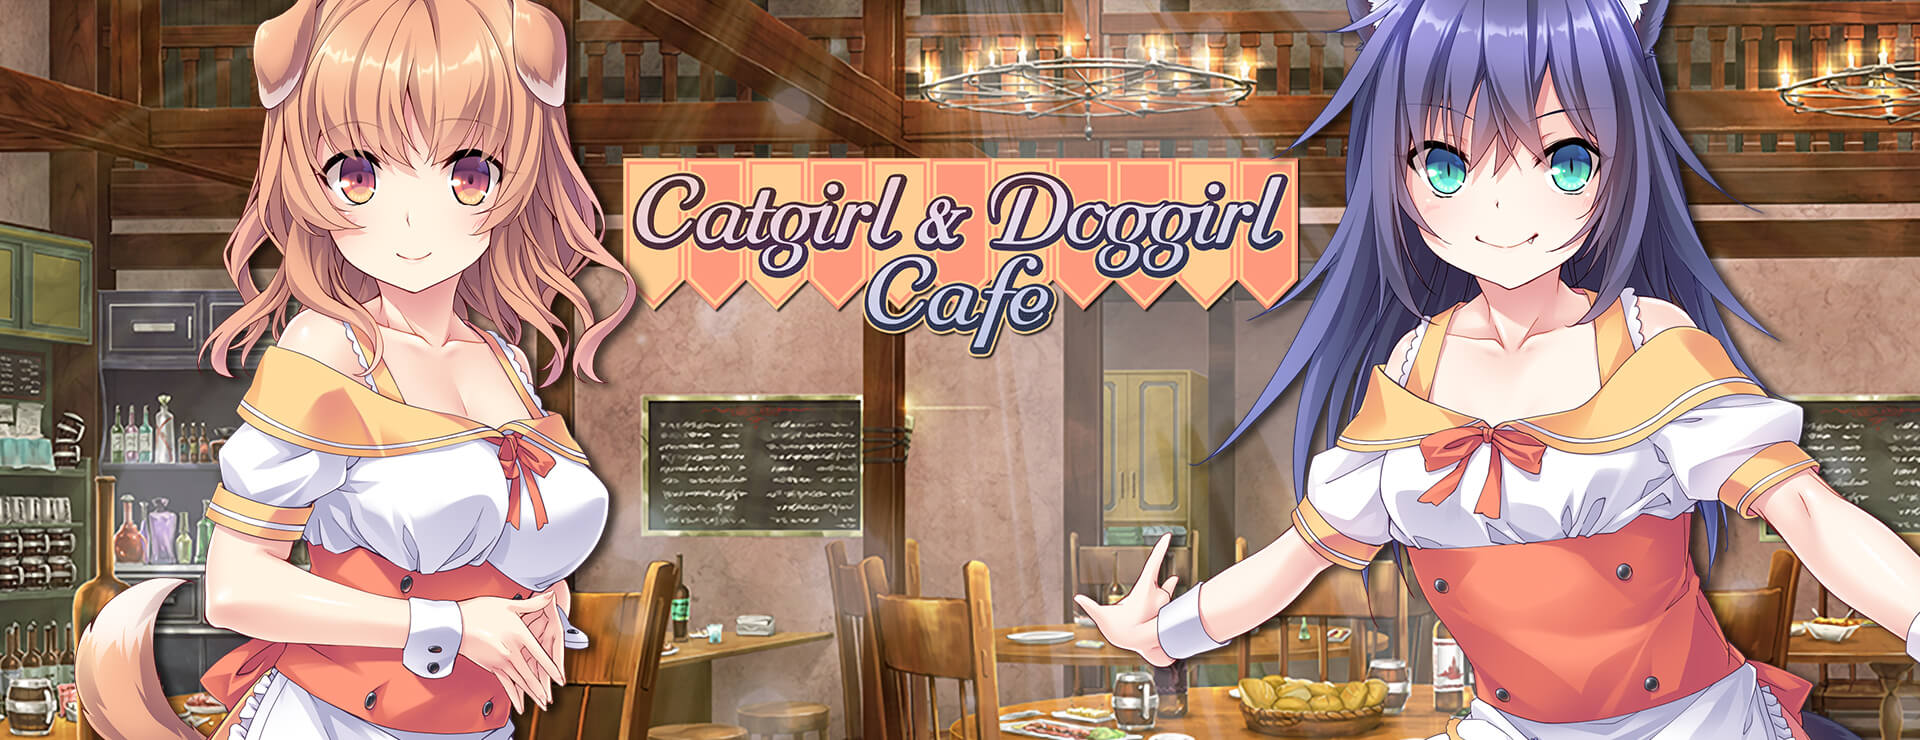 Catgirl and Doggirl Cafe - Visual Novel Game